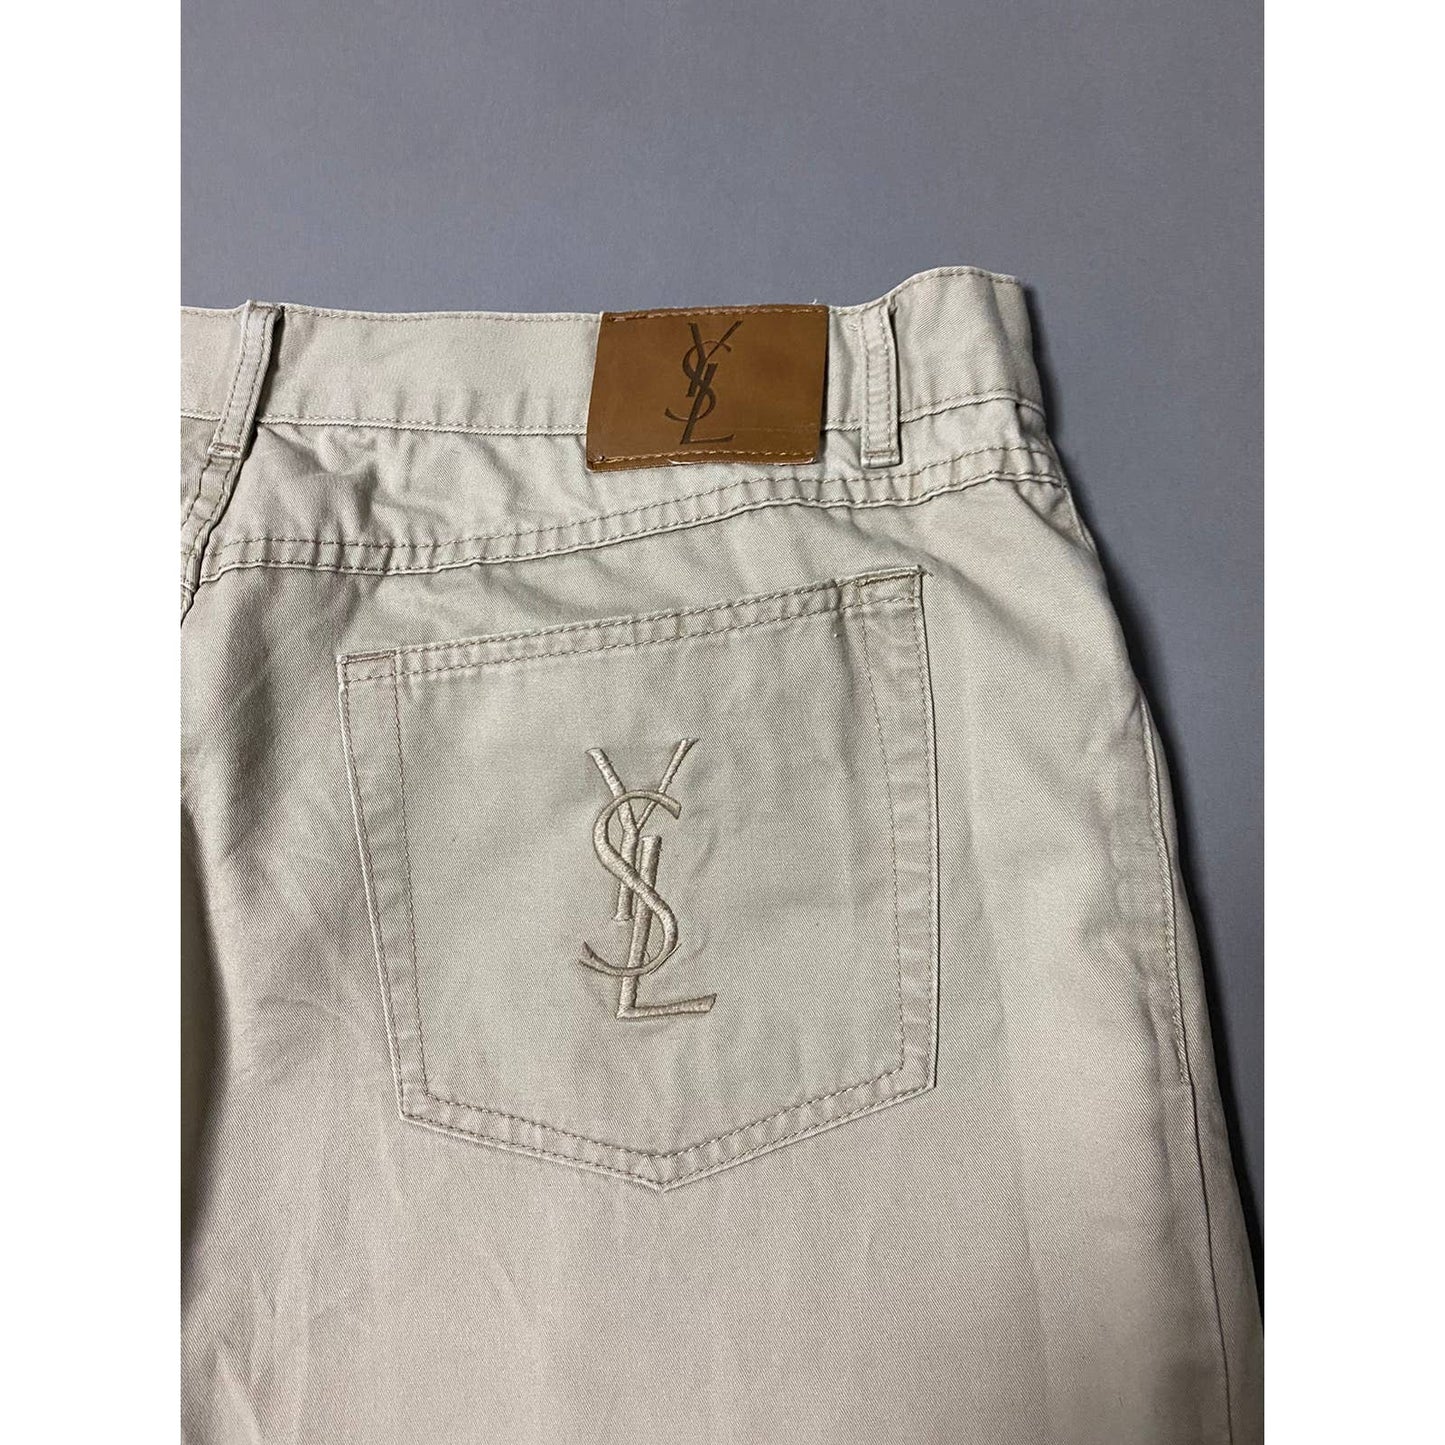 90s Yves Saint Laurent vintage YSL big logo chino pants